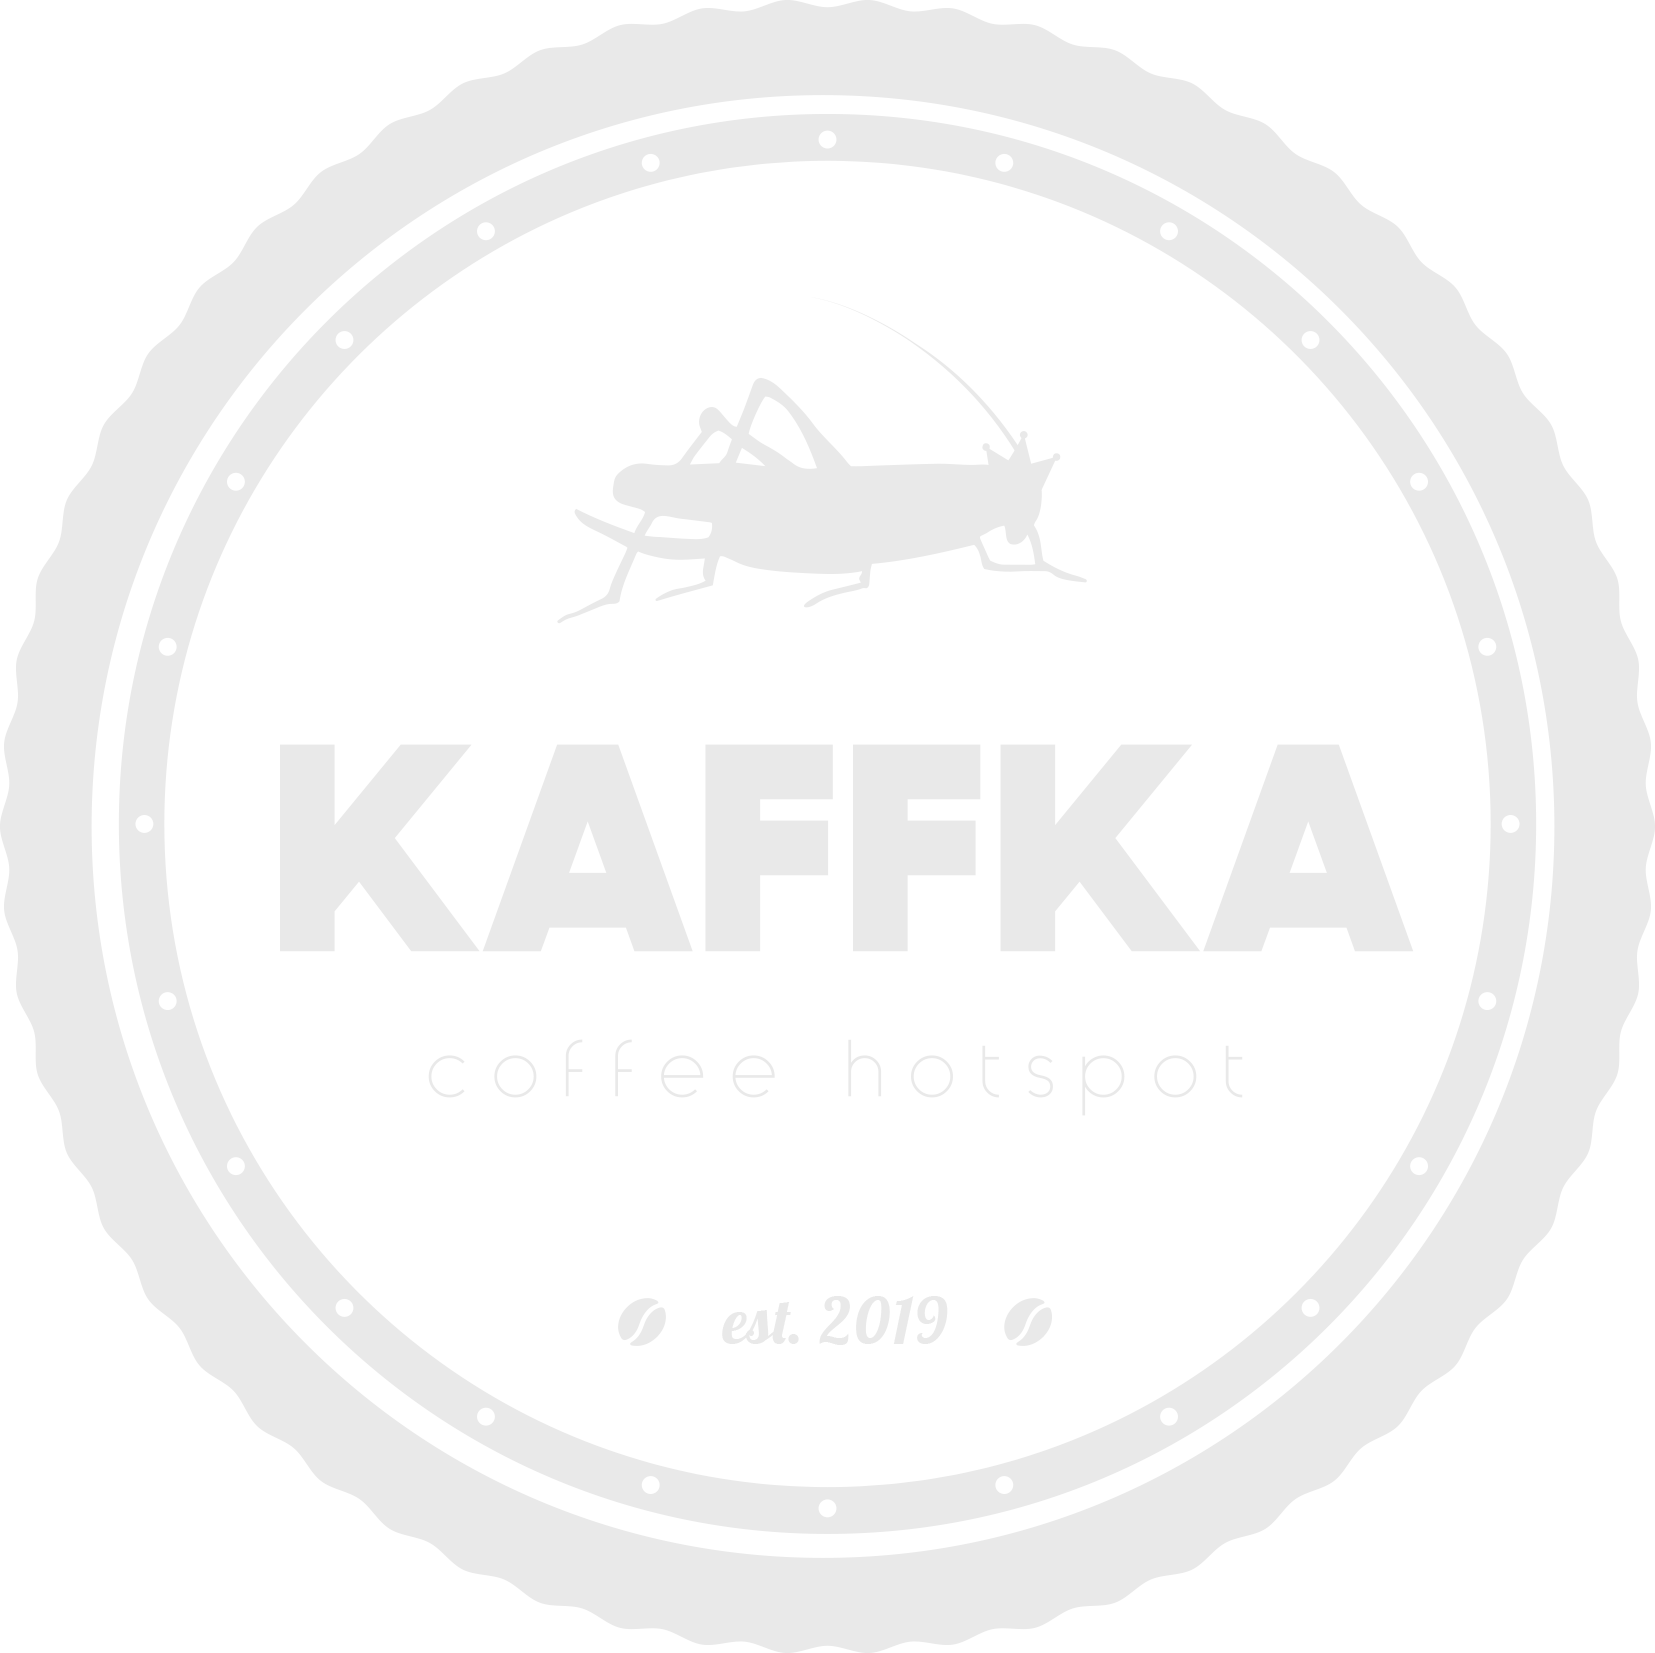 Kaffka Coffee Hotspot